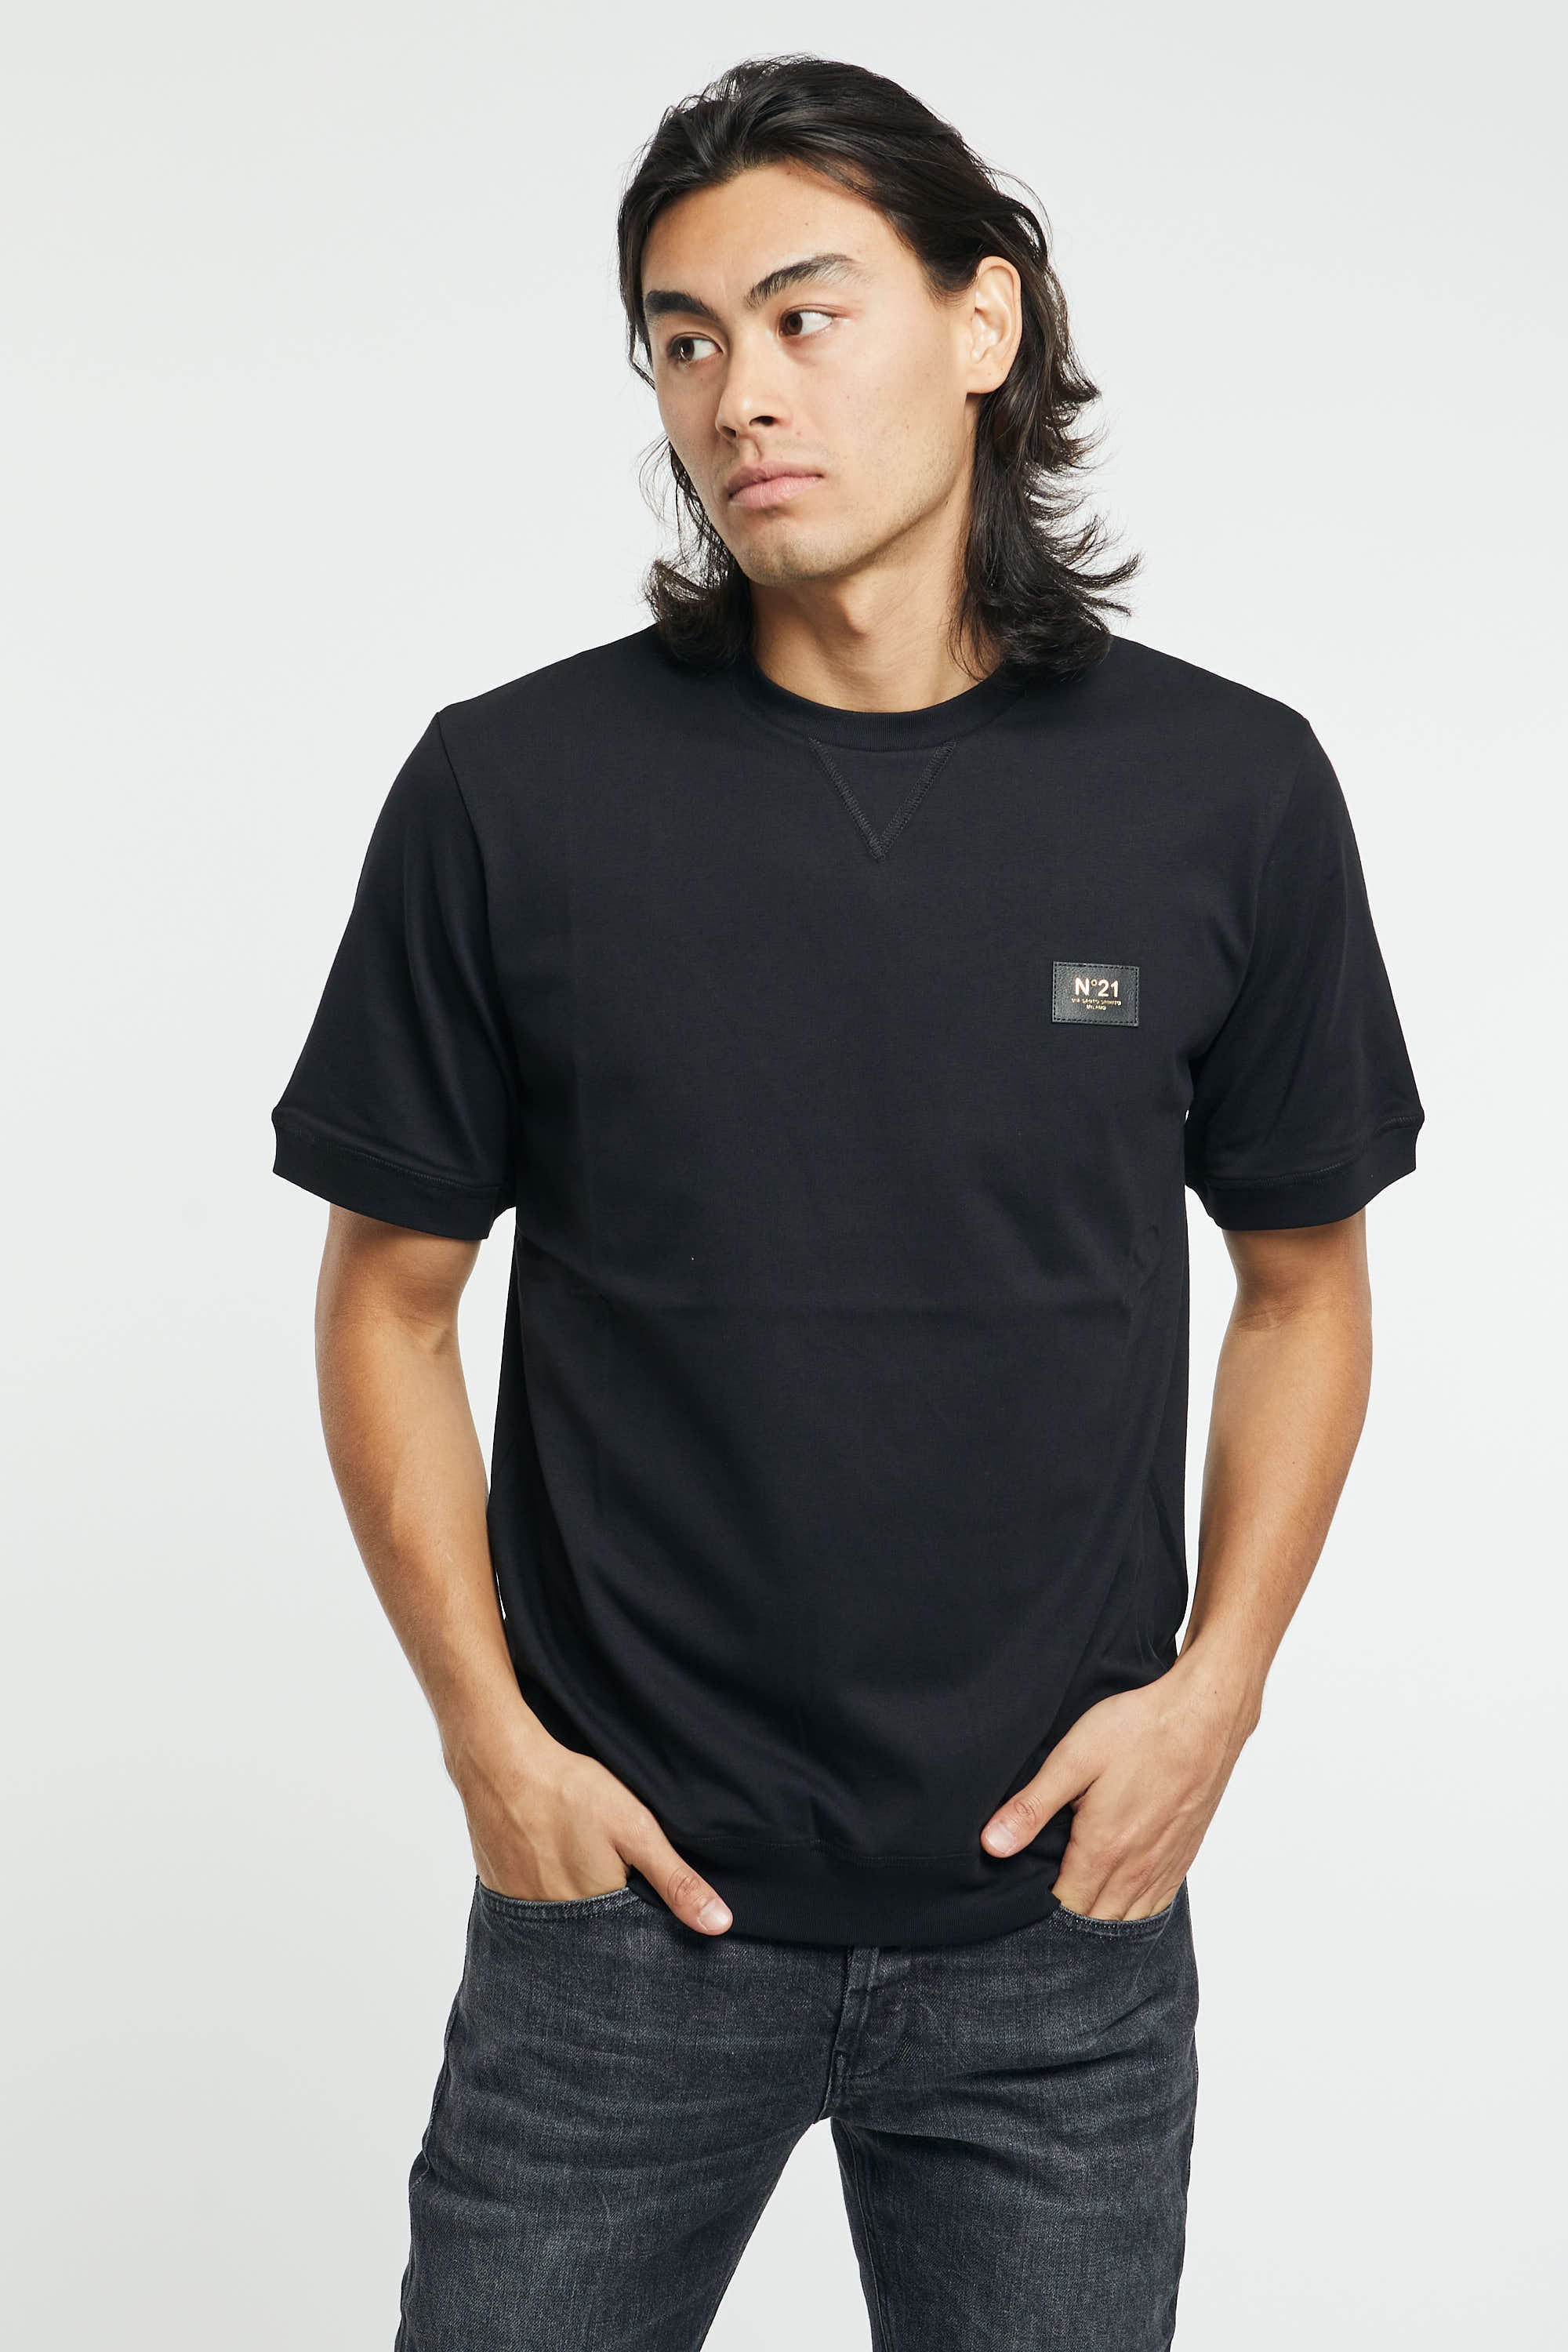 N°21 Cotton/Eco-leather T-Shirt Black - 5